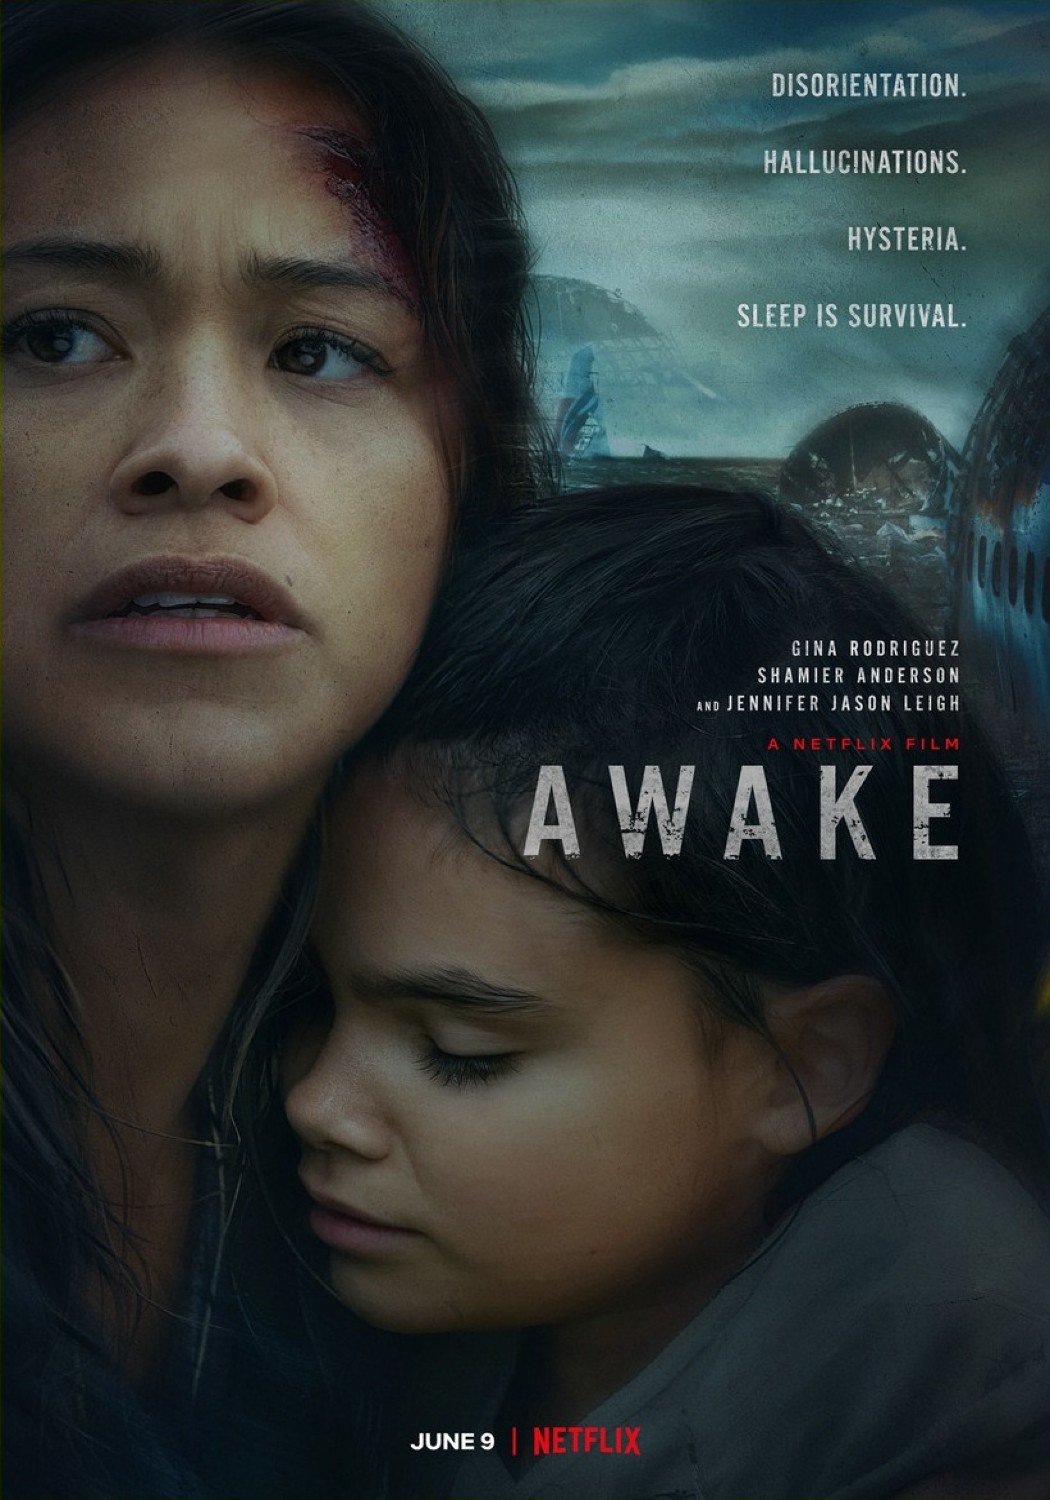 awake-film-2021